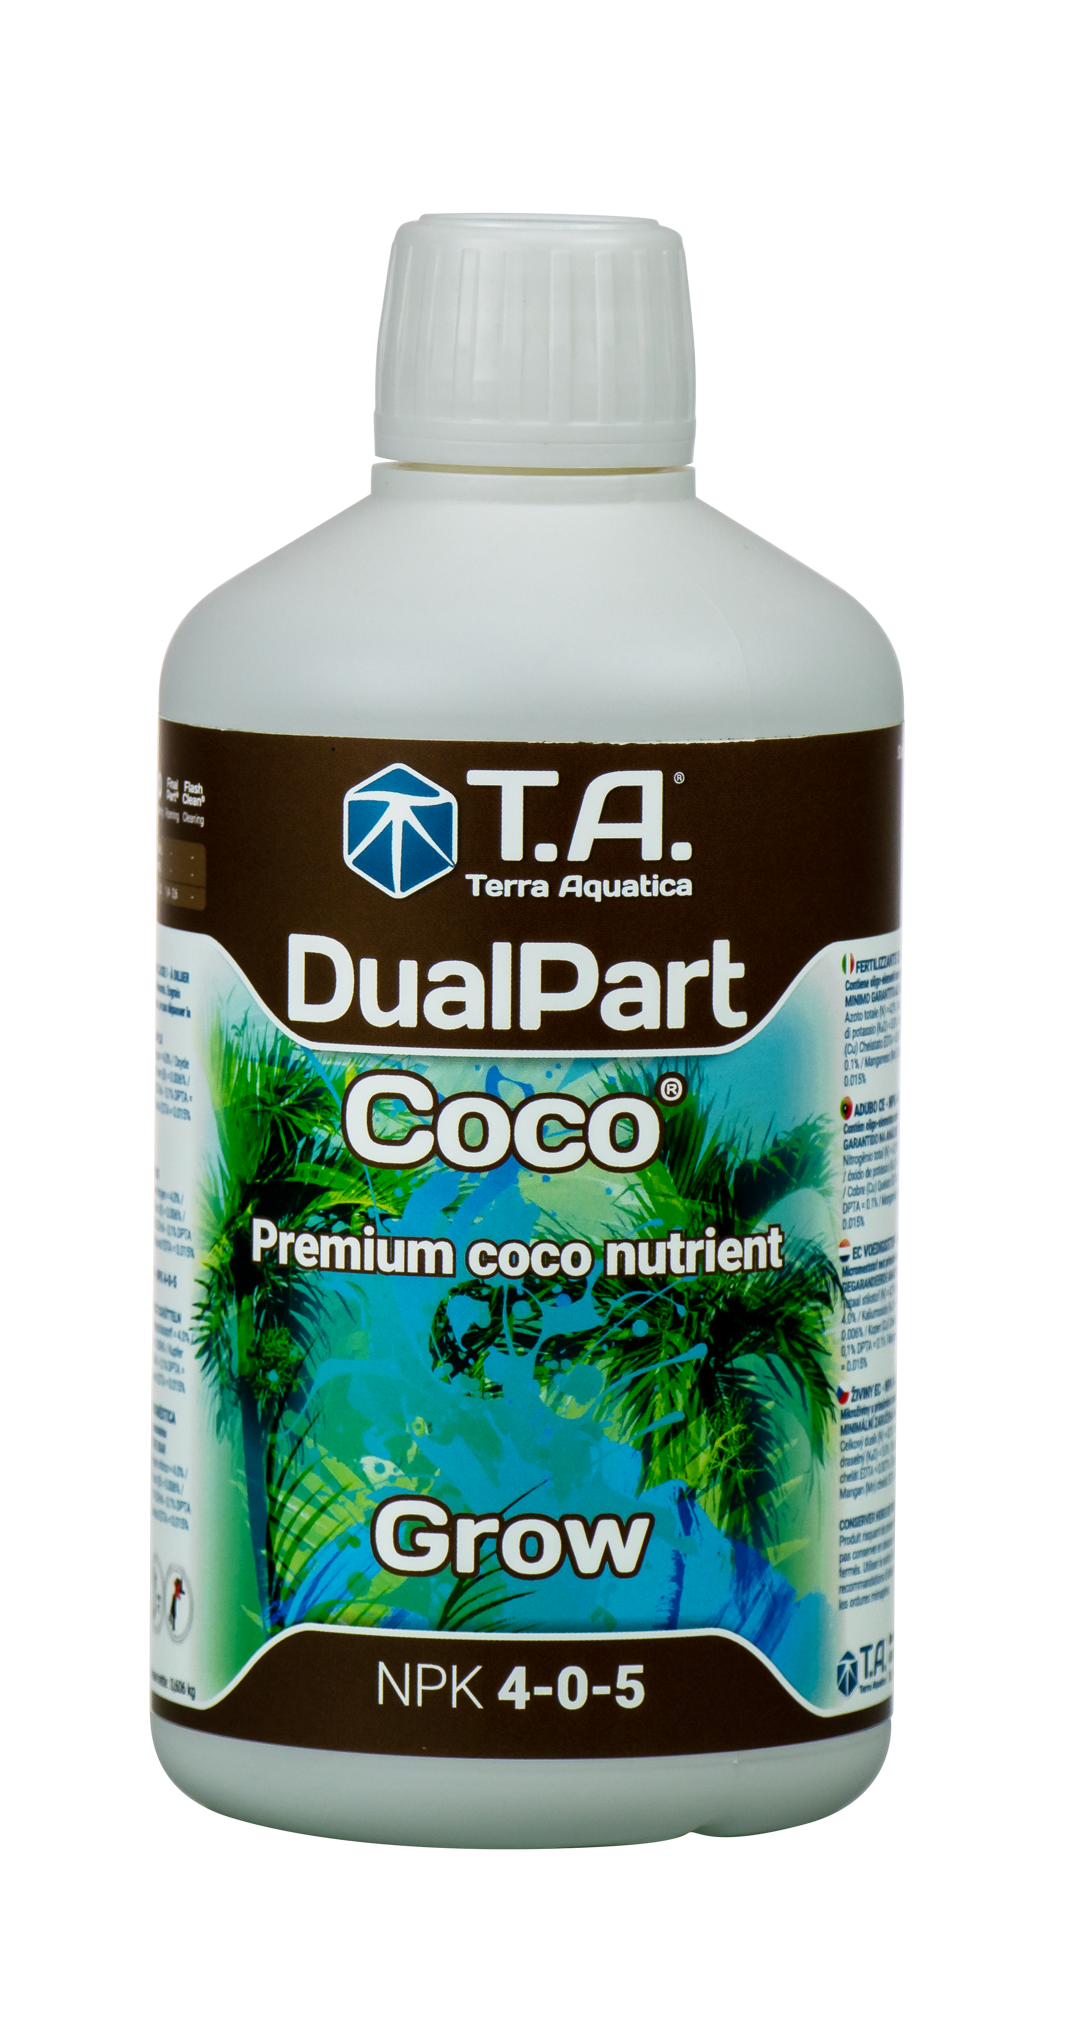 DualPart Coco Grow